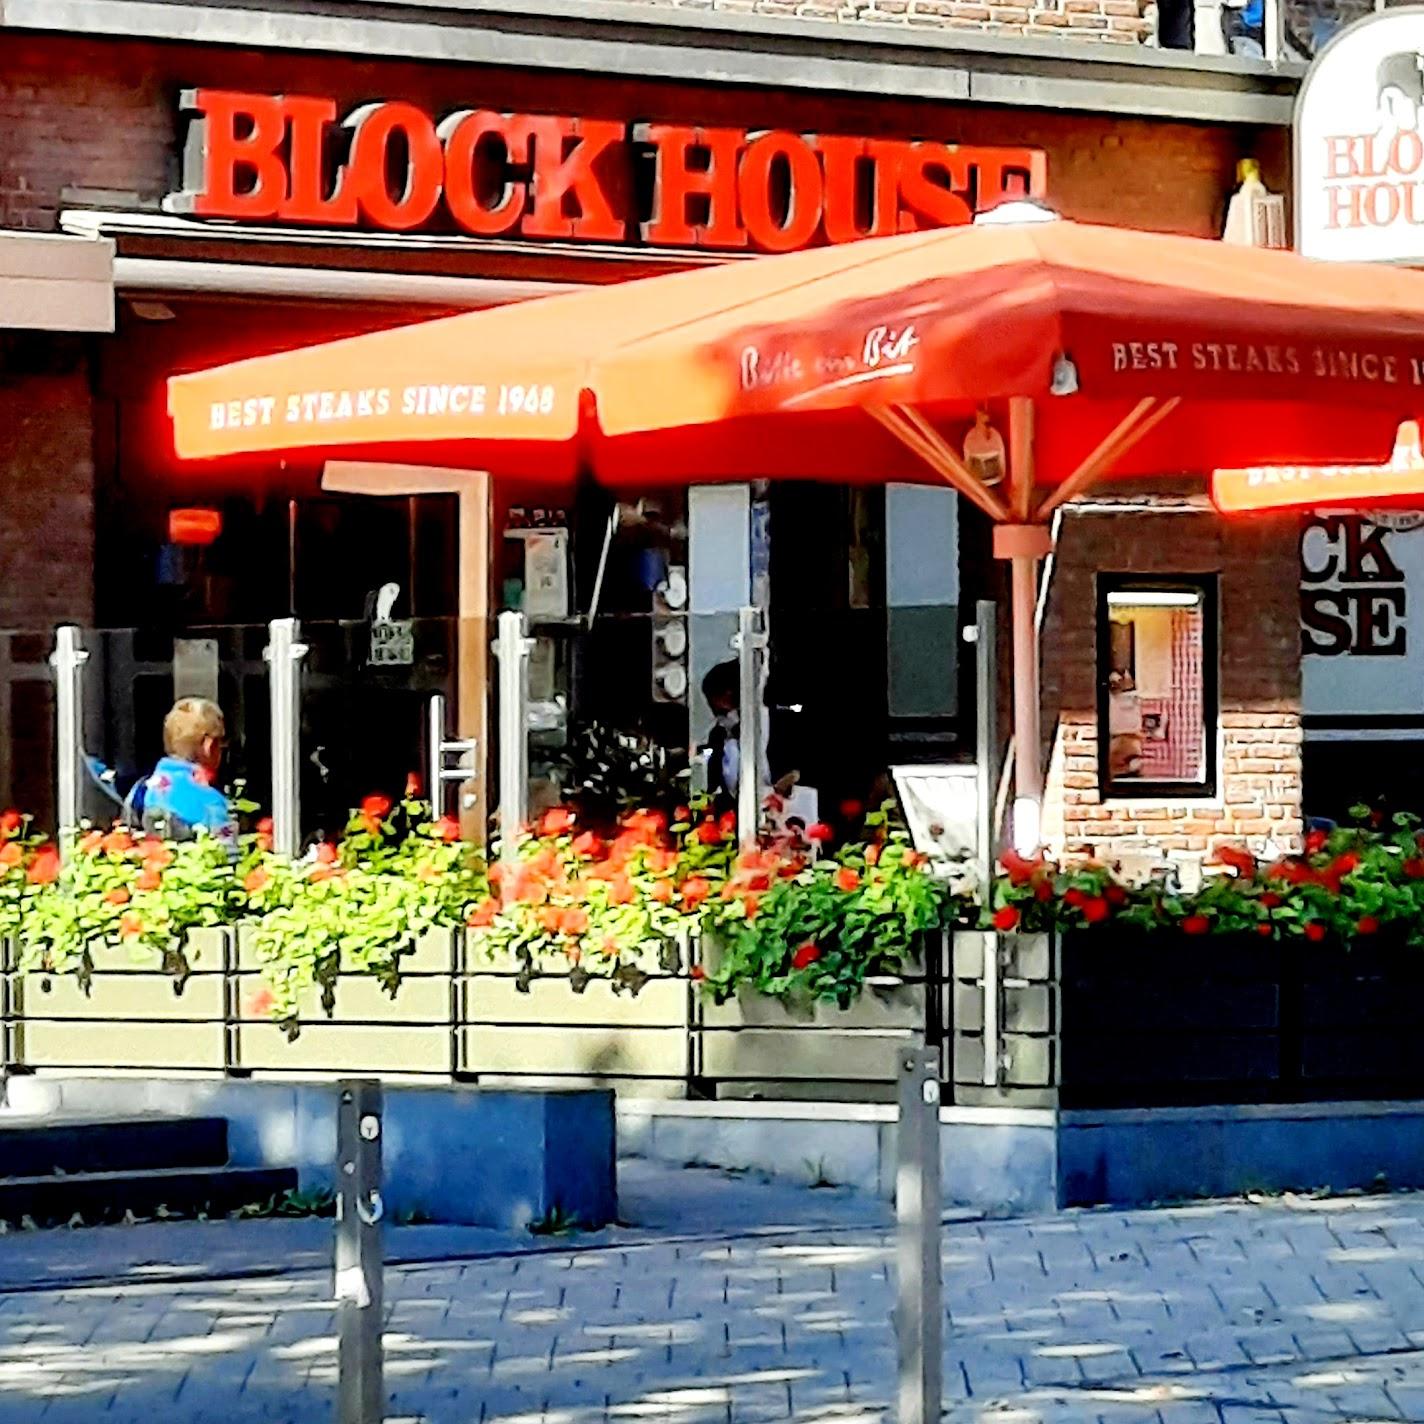 Restaurant "BLOCK HOUSE Barmbek" in Hamburg